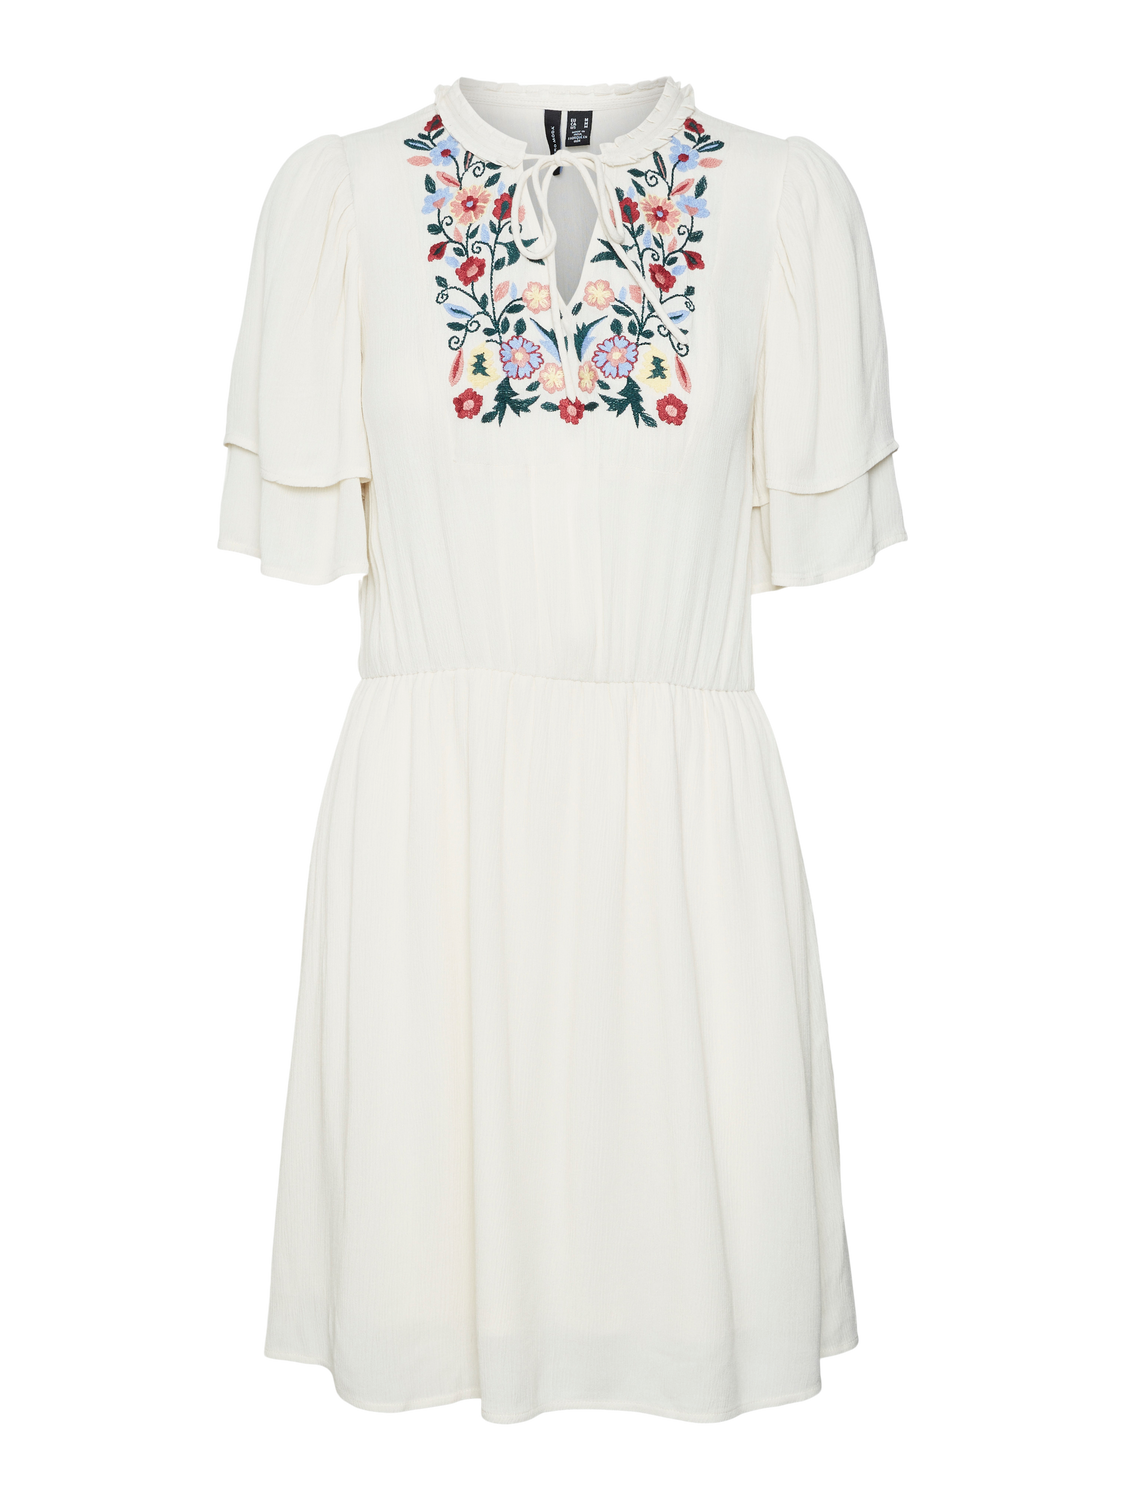 Vero Moda VMSINA Short dress -Birch - 10314278